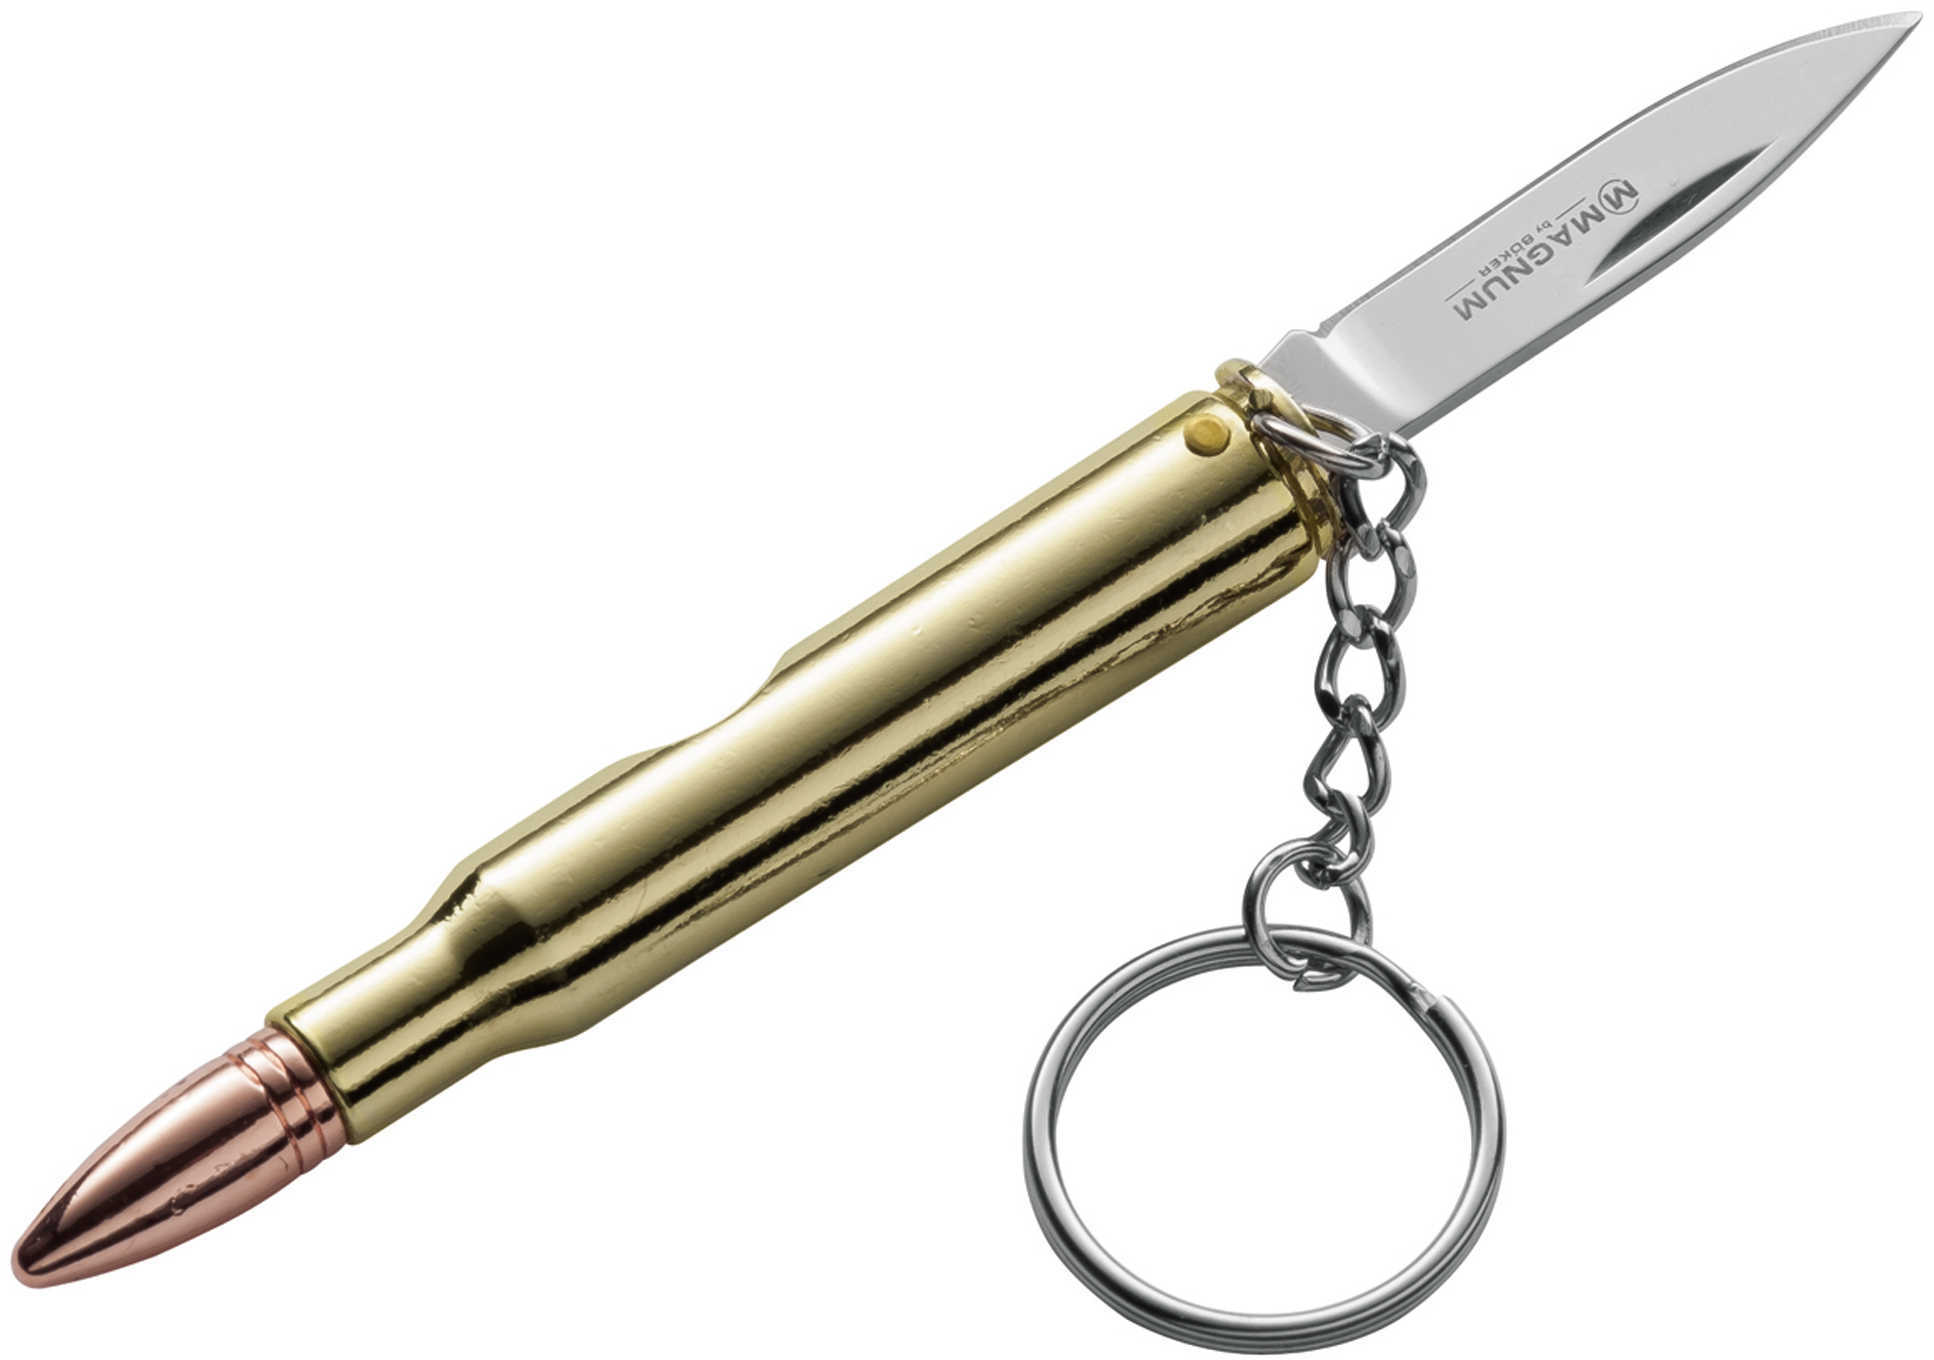 Boker USA Inc. Knives Magnum Bullet Knife Keychain Md: 01SC249